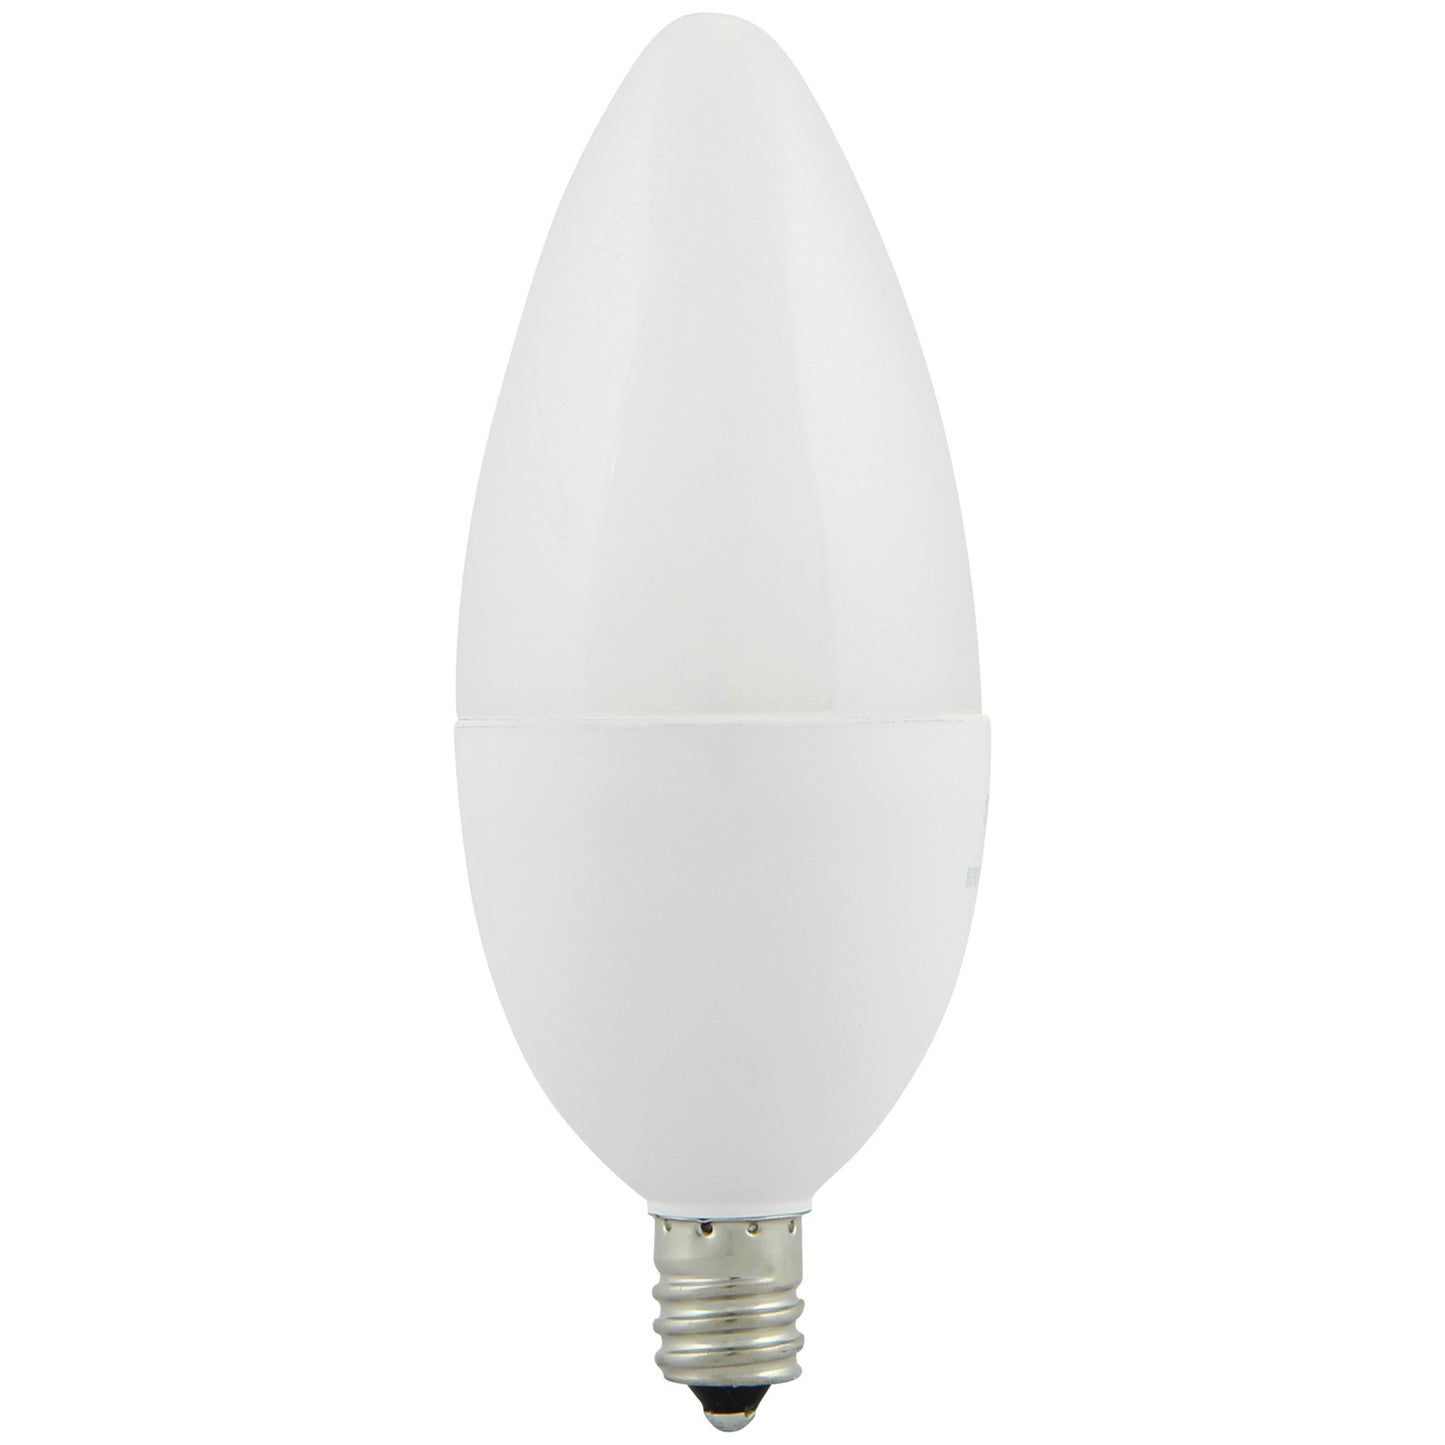 Sunlite 80406 LED B11 Decorative Chandelier Light Bulb, 7 Watts (60W=), 500 Lumens, 120 Volts, Dimmable, E12 Base, Energy Star, 90 CRI, ETL Listed, Torpedo Frosted, Title-20, 2700K Soft White, 6 Pack